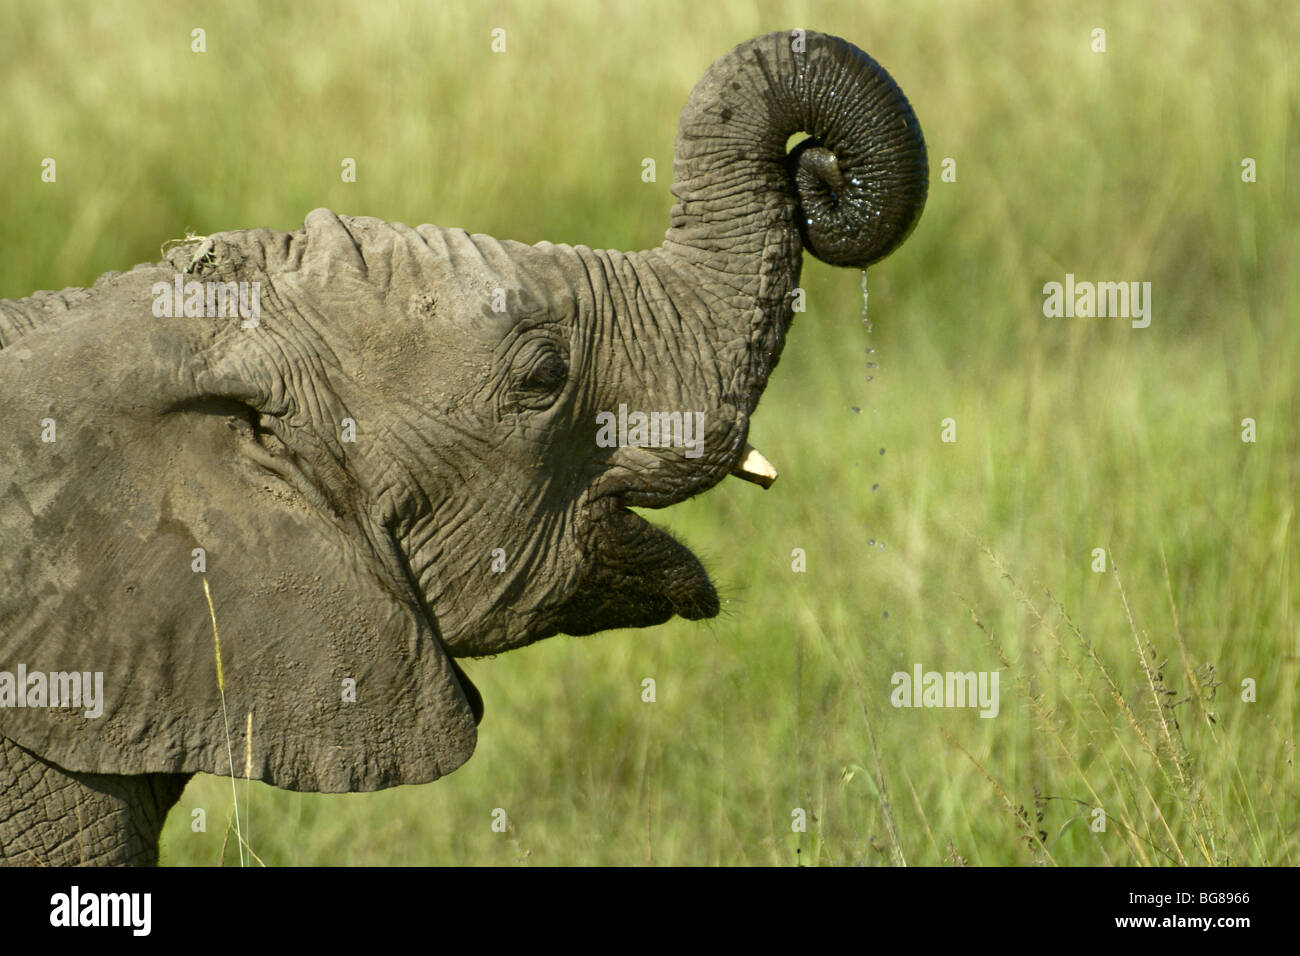 Young elephant playing with water, Masai Mara, Kenya Stock Photo